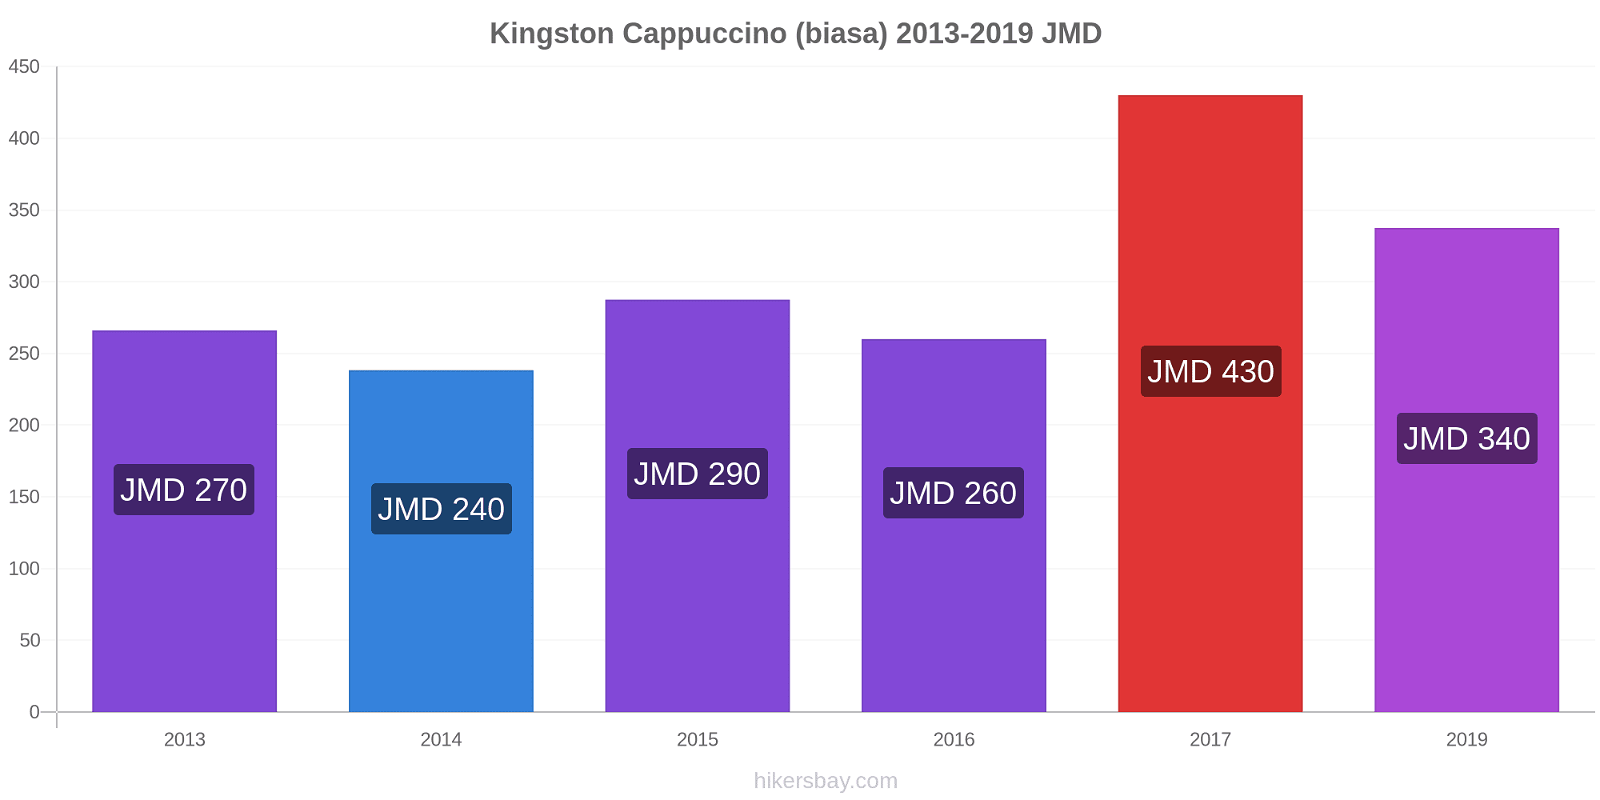 Kingston perubahan harga Cappuccino (biasa) hikersbay.com